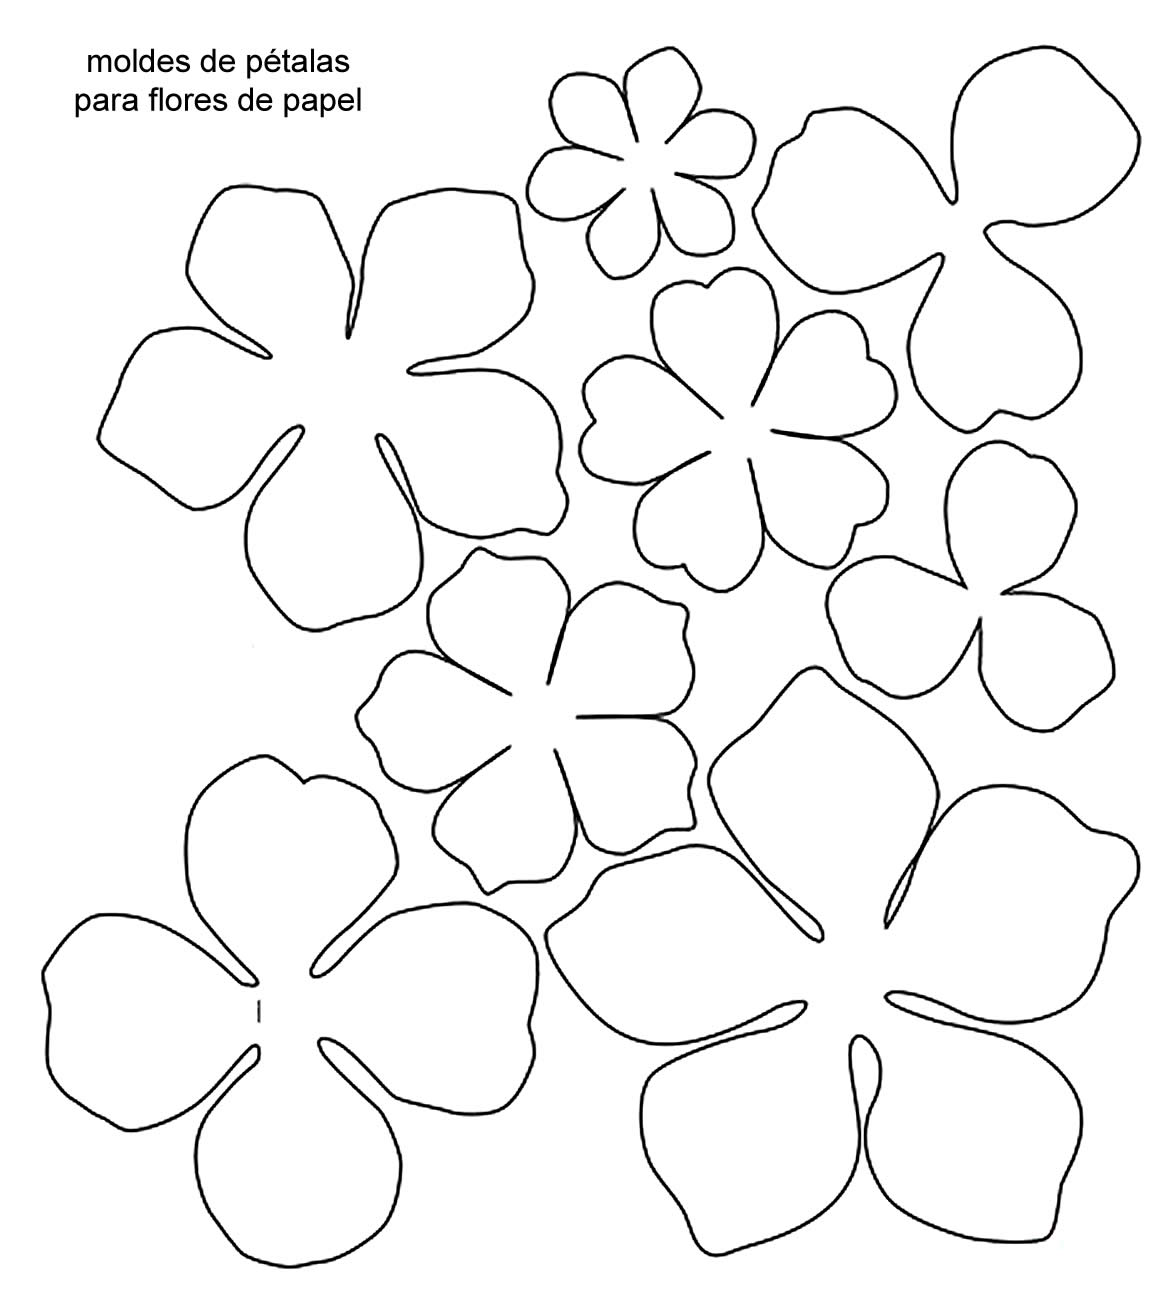 Molde Das Petalas De Flores De Papel - Flores de Papel